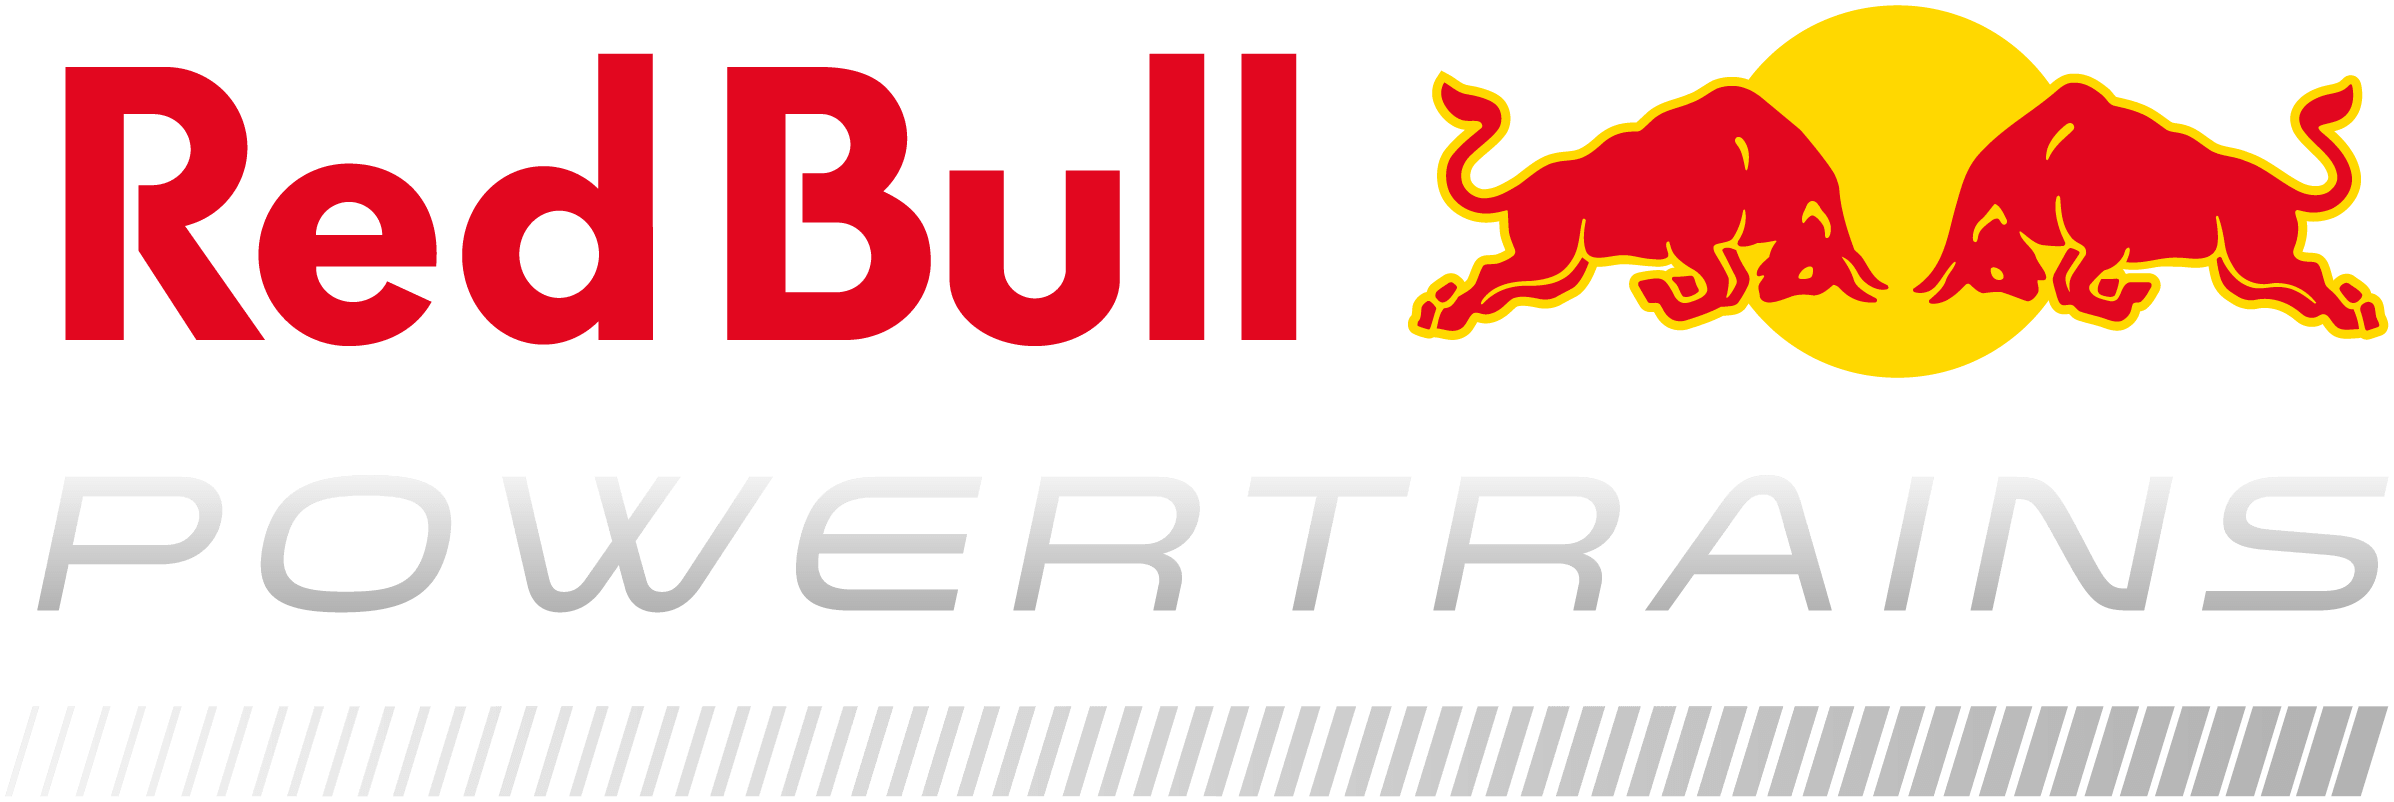 Red Bull Powertrains Logo (dark Background) 